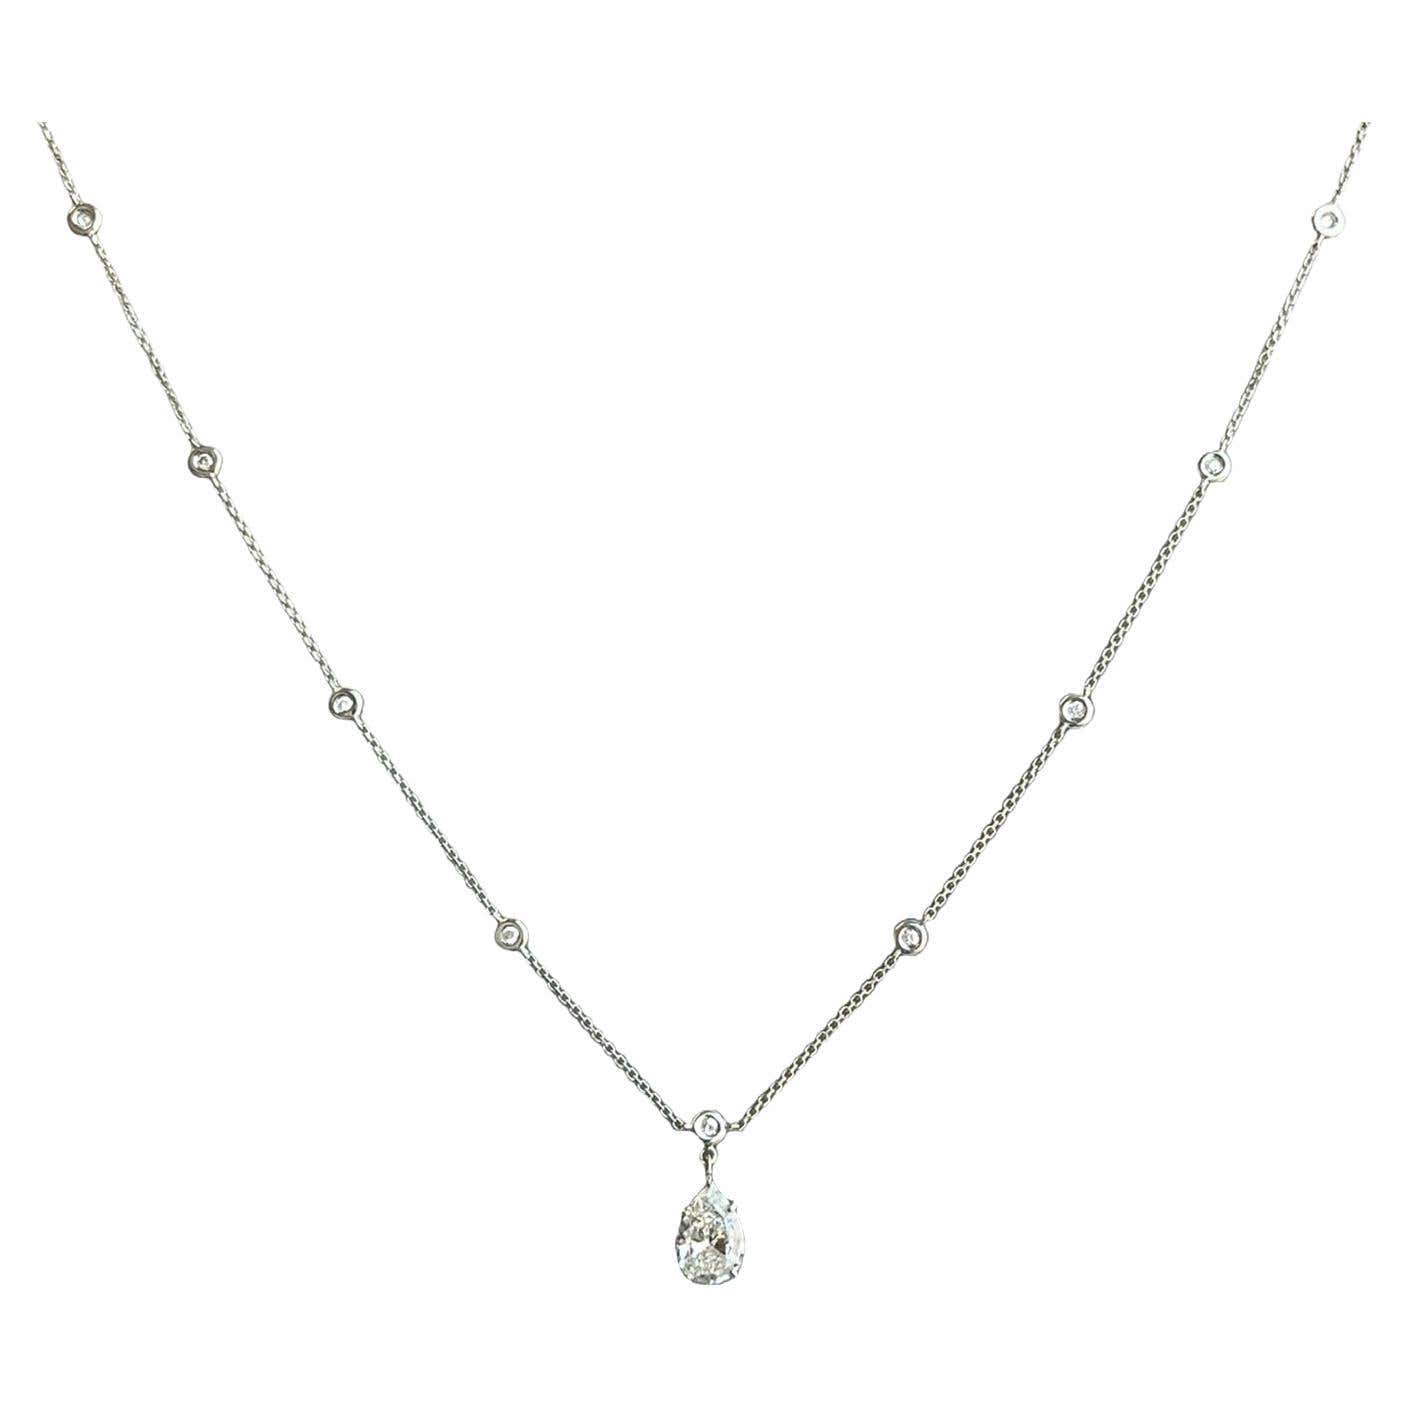 1.56ct Pear Shape Diamond Link Chain Station Necklace Pendant 14K White Gold